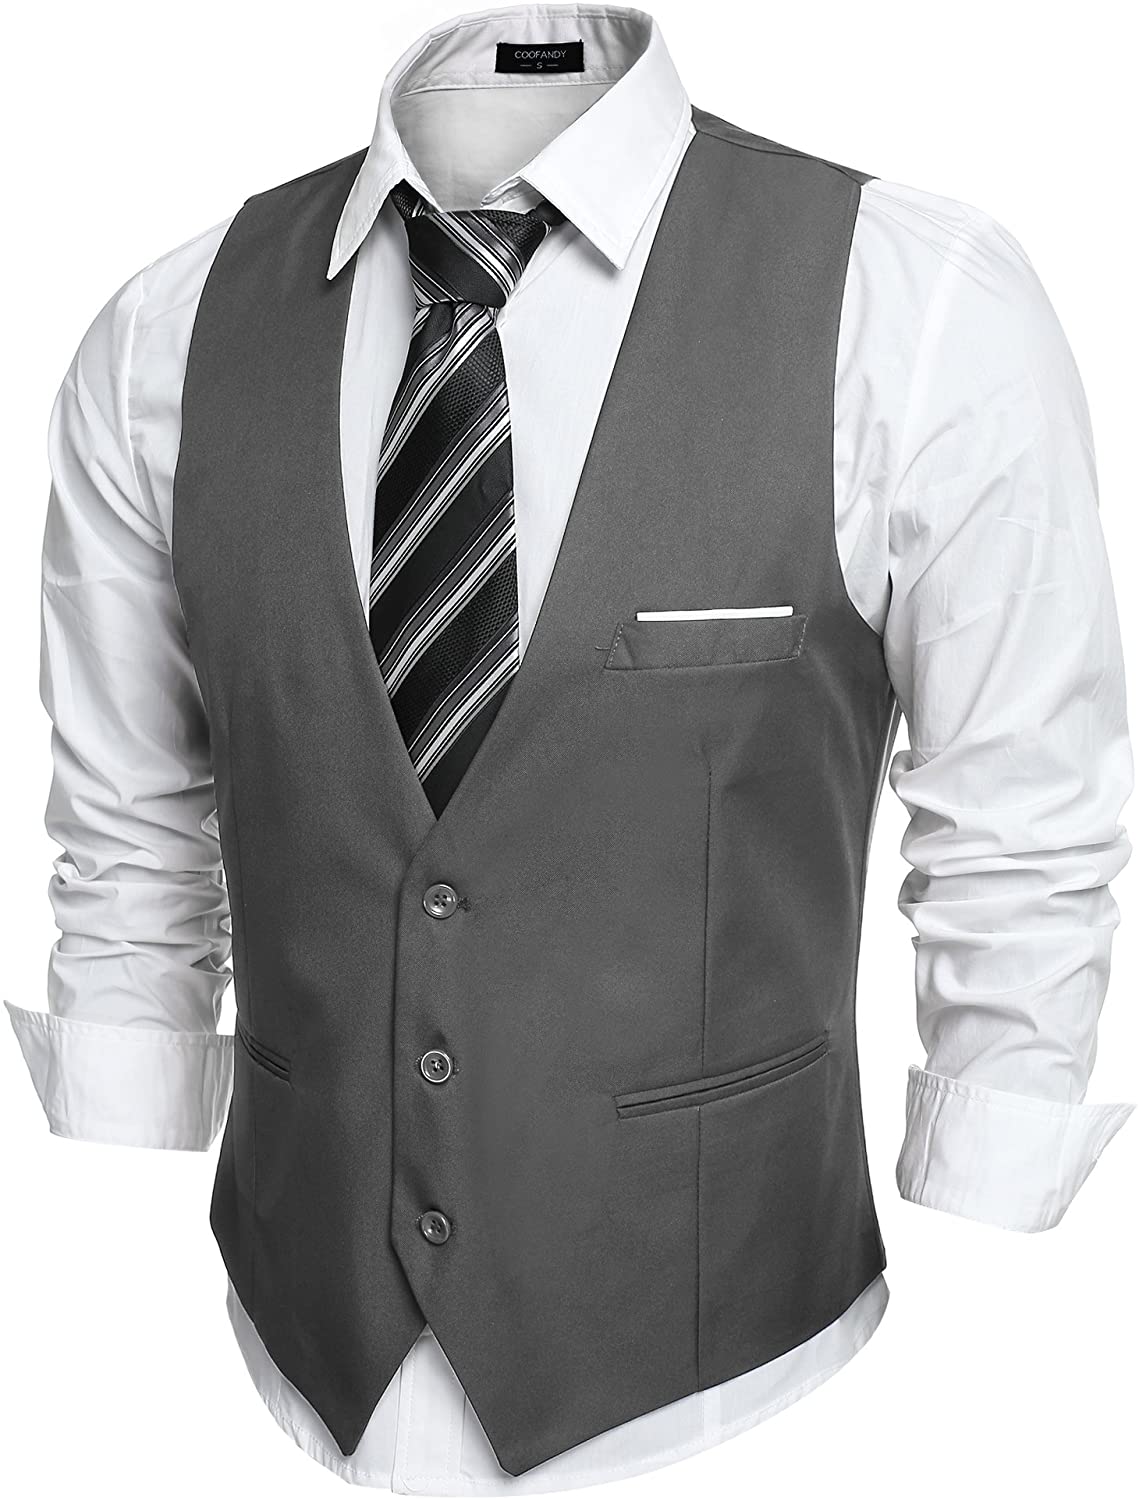 Holzkary Mens V-Neck Slim Fit Business Suit Sleeveless 6 Button Dress Vest Waistcoat Jacket